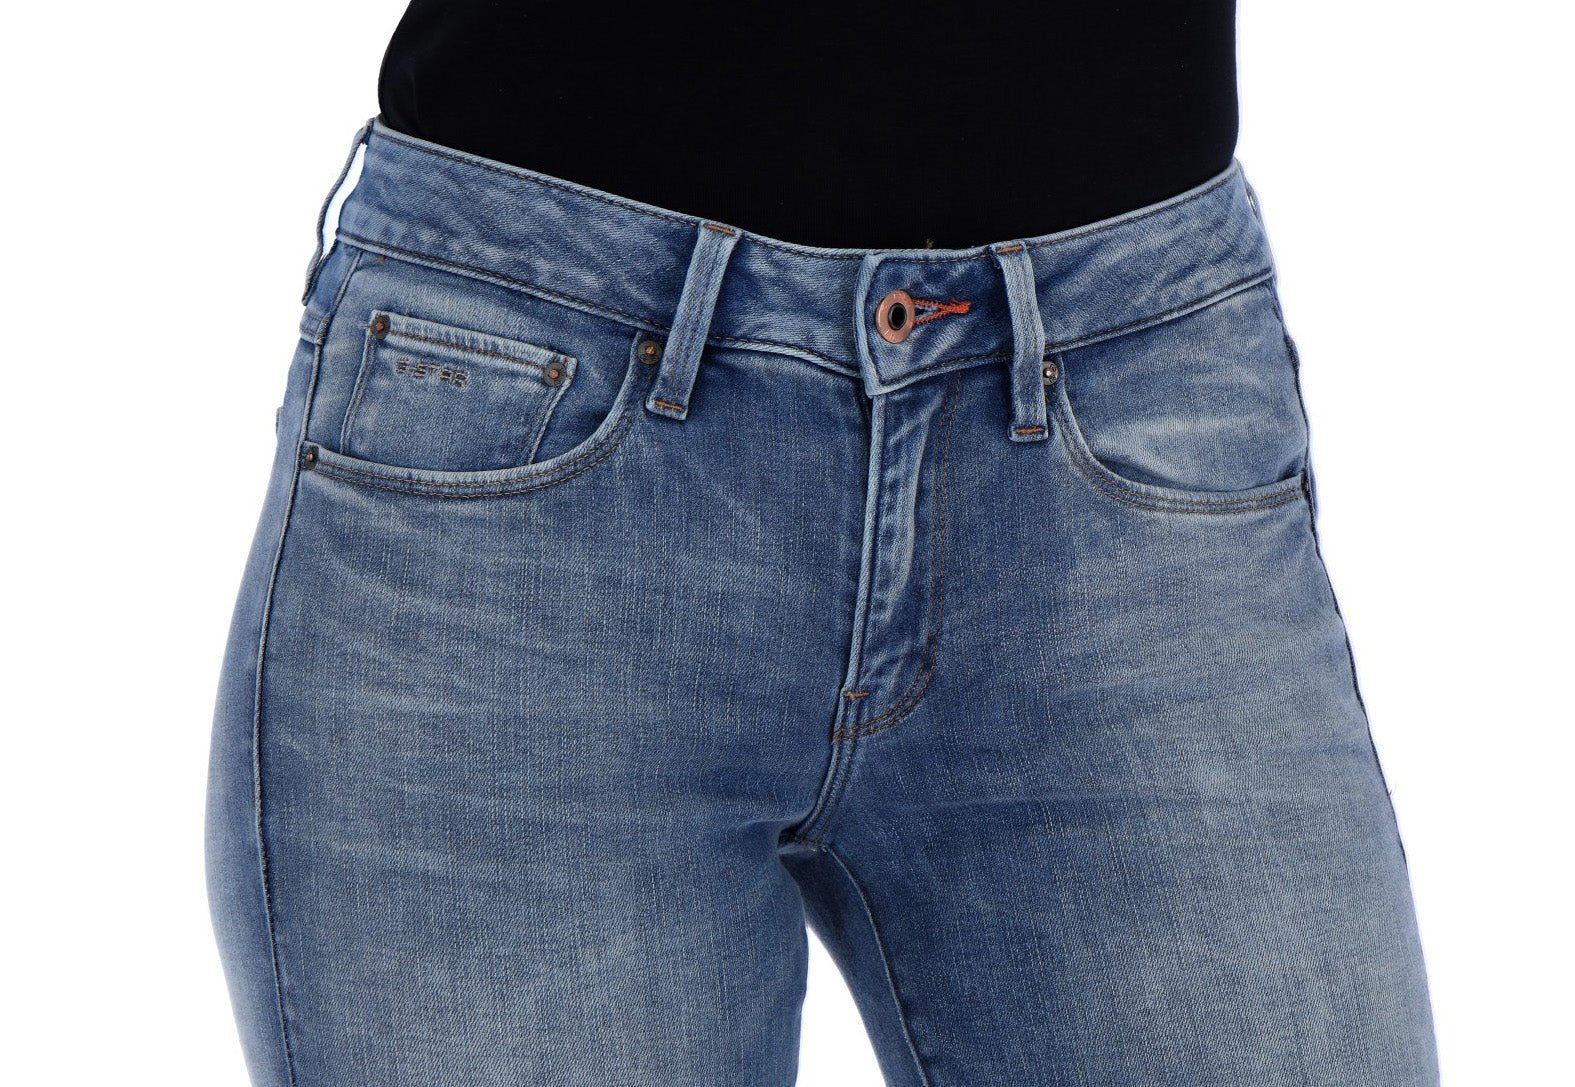 G-STAR RAW DENIM 3301 MID SKINNY RP ANKLE Damen Jeans vintage beryl blue - G-Star Raw Denim - SAGATOO - 8719771055677